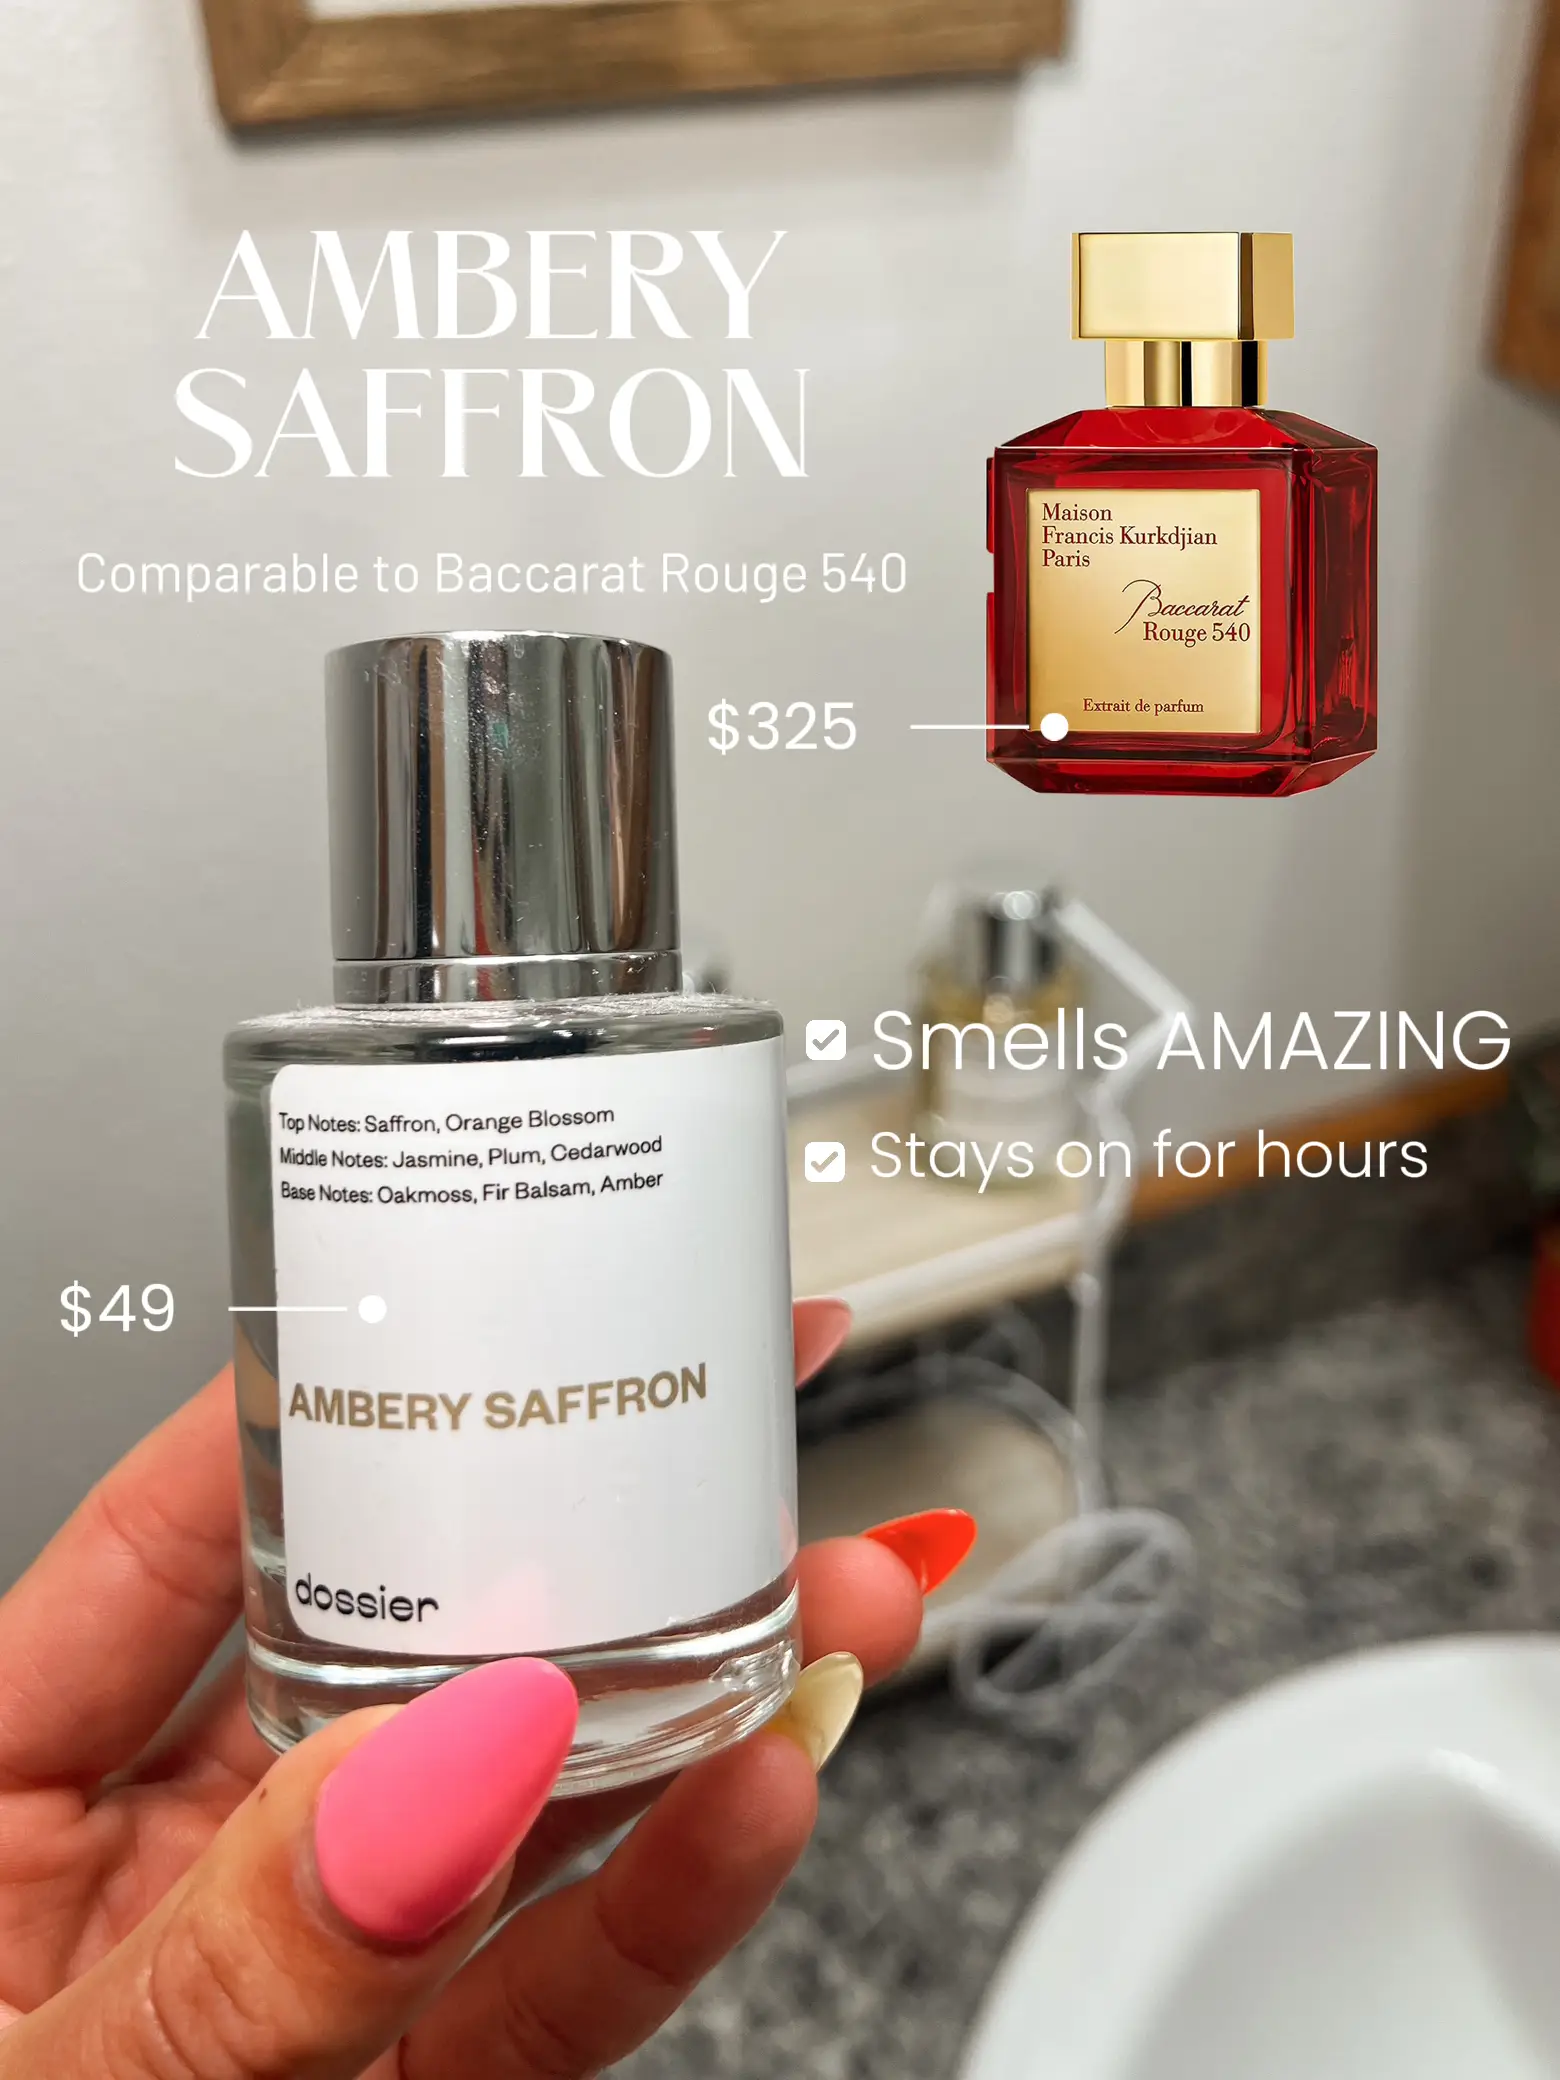 Carolina Herrera's Good Girl Dupe Perfume: Fruity Almond - Dossier